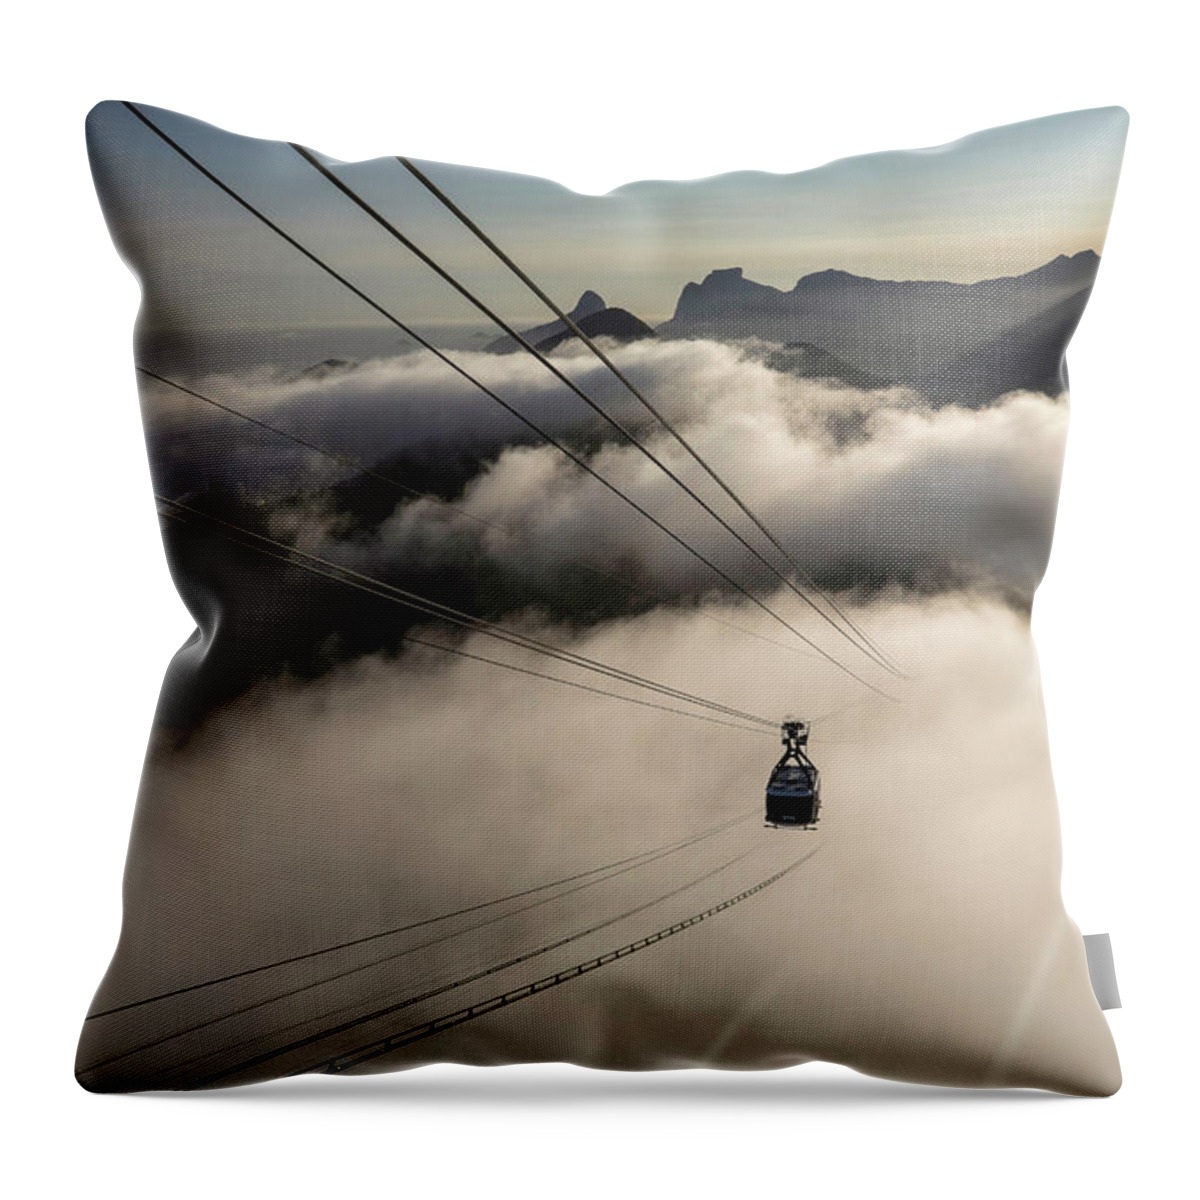 Estock Throw Pillow featuring the digital art Brazil, Rio De Janeiro, Cable Car by Tony J Burns